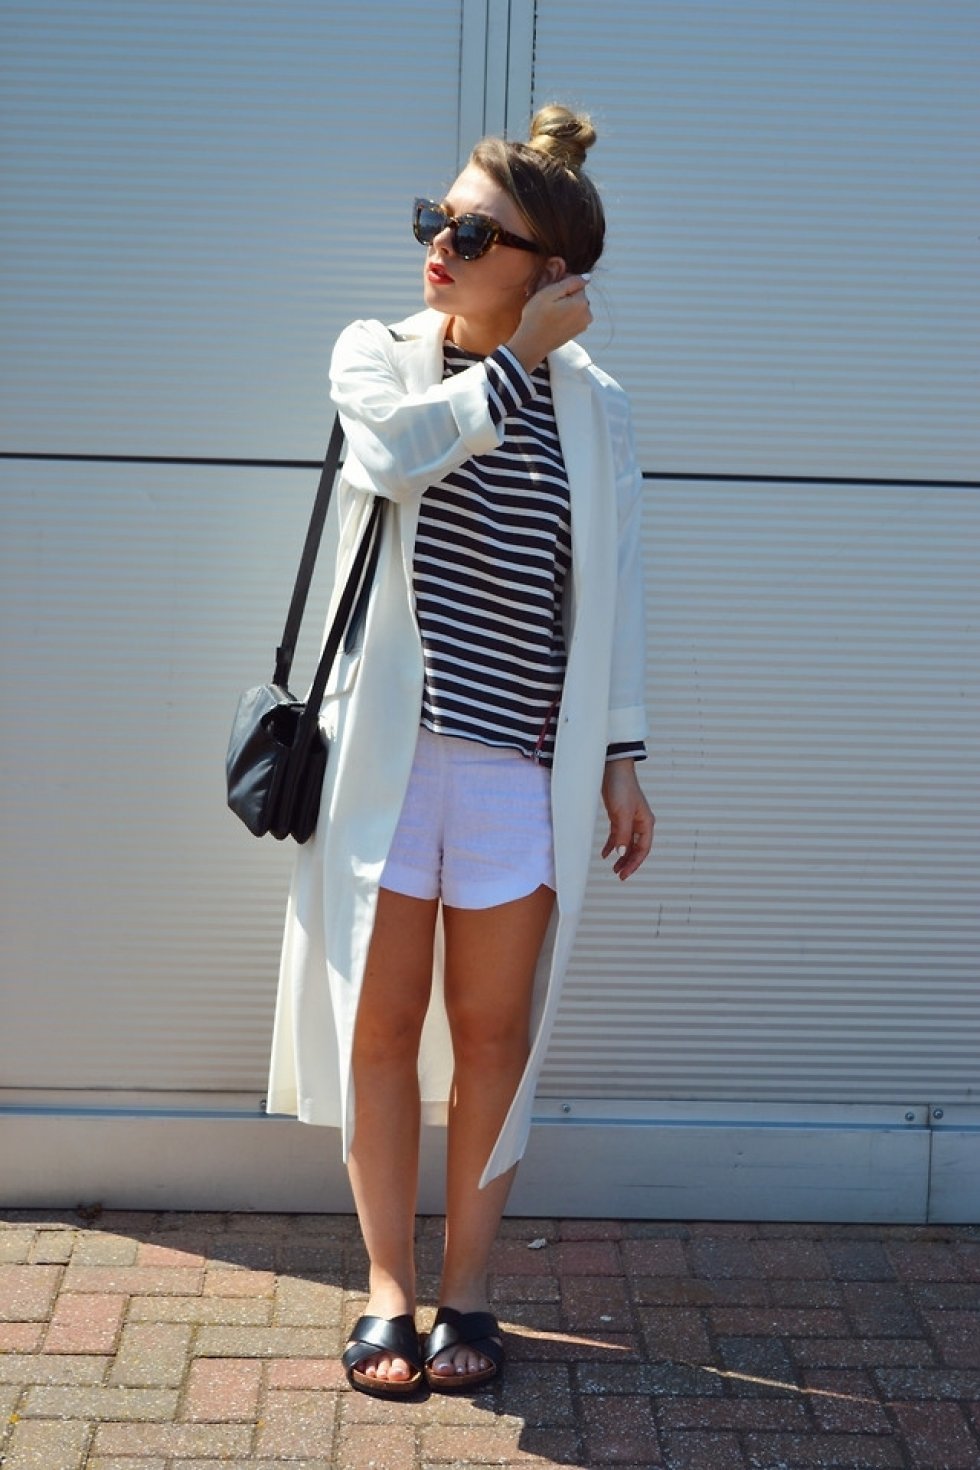 Foto: http://lookbook.nu/look/6291309-Asos-Sunglasses-H&M-Top-Duster-Coat-Shorts-Sliders - Inspiration 2014: Sommershorts